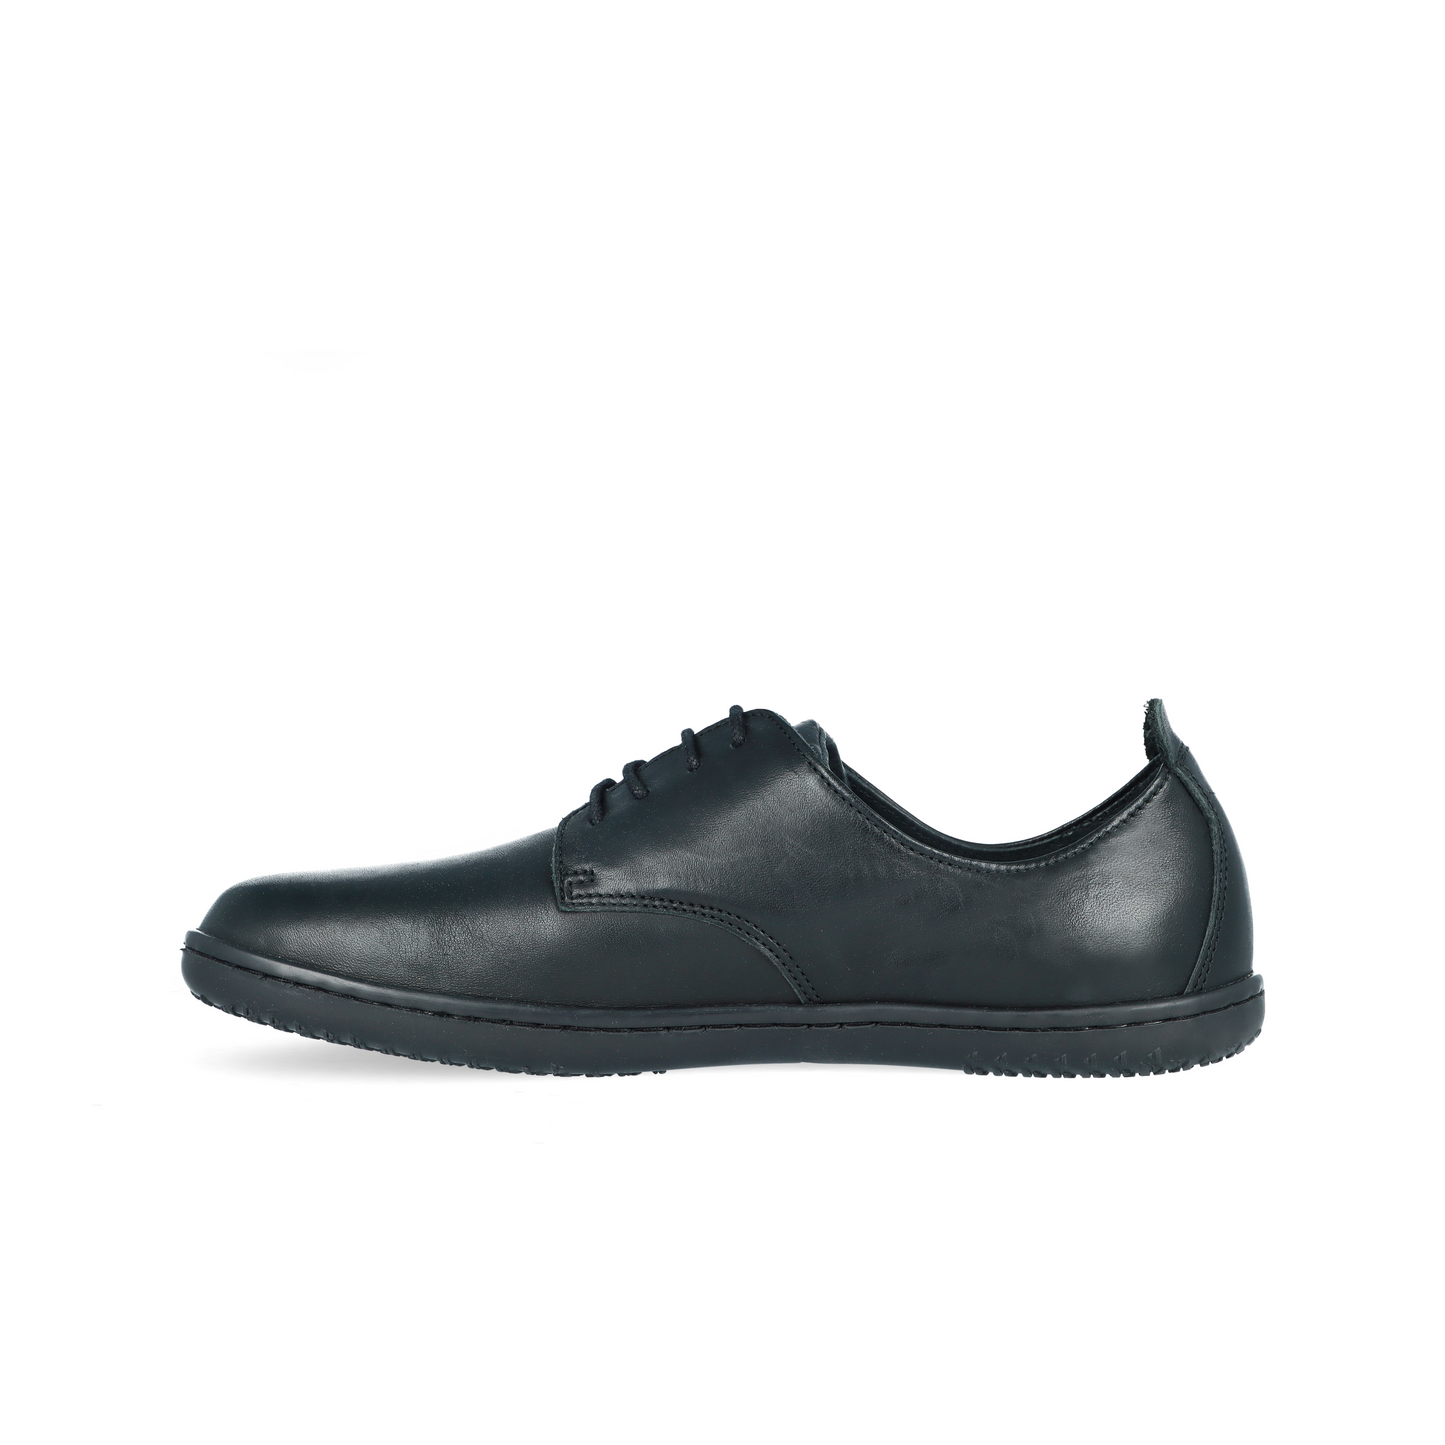 Angles Fashion - Chronos black - Zapatos barefoot